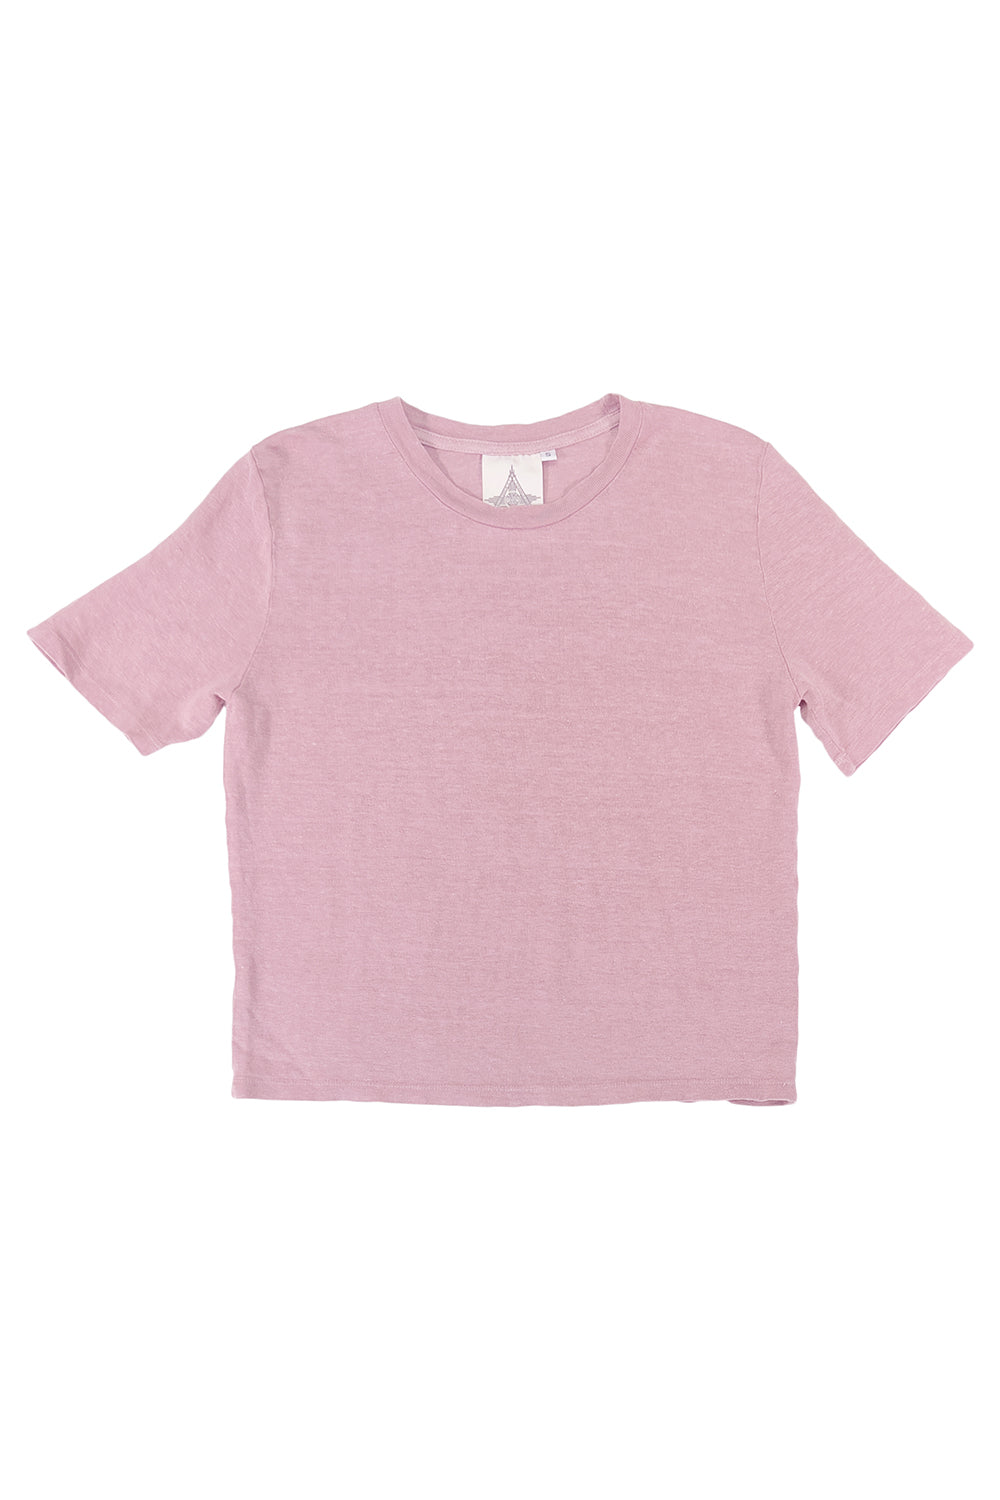 Dakota - 100% Hemp Cropped Tee | Jungmaven Hemp Clothing & Accessories / Color: Rose Quartz